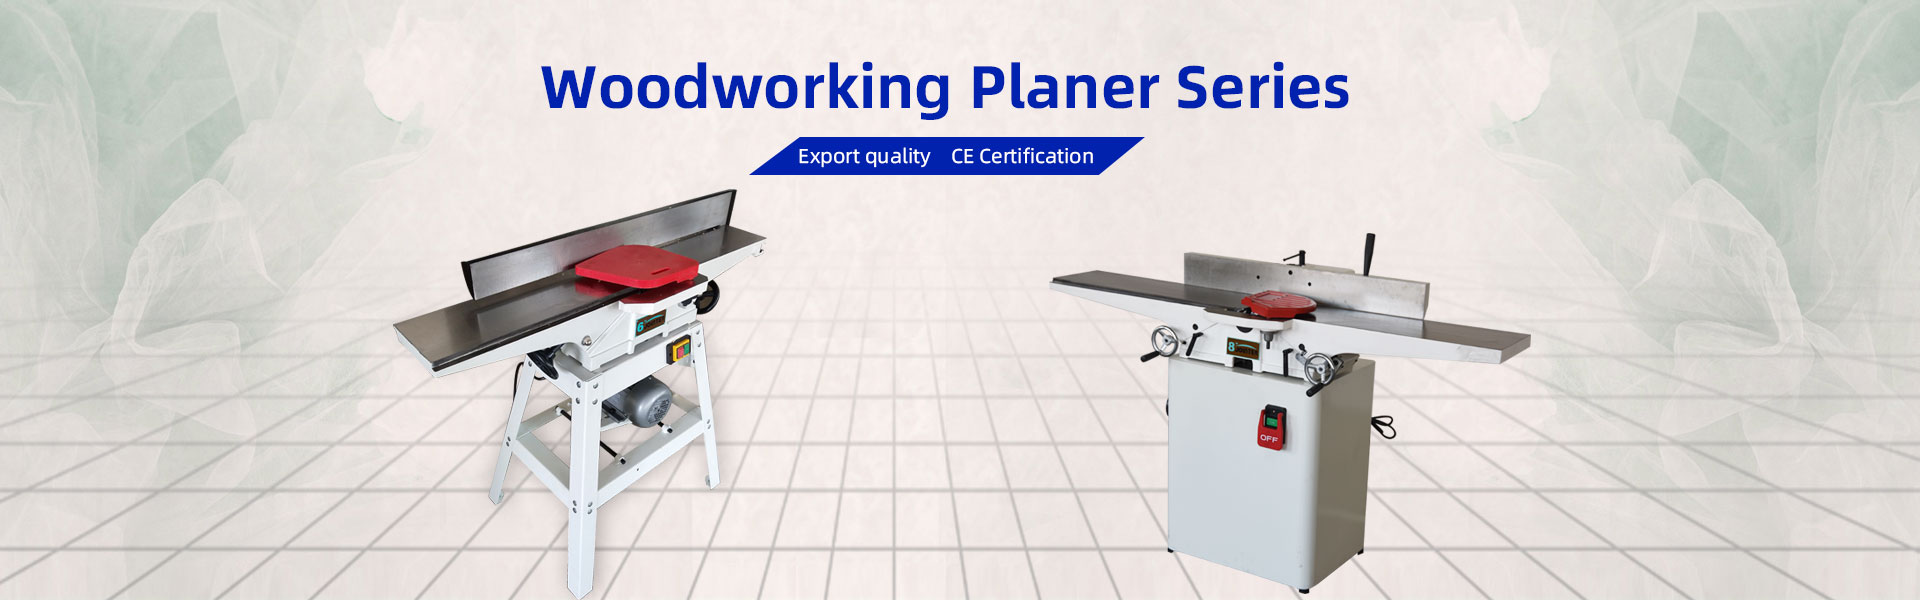 Woodworking Planer Series